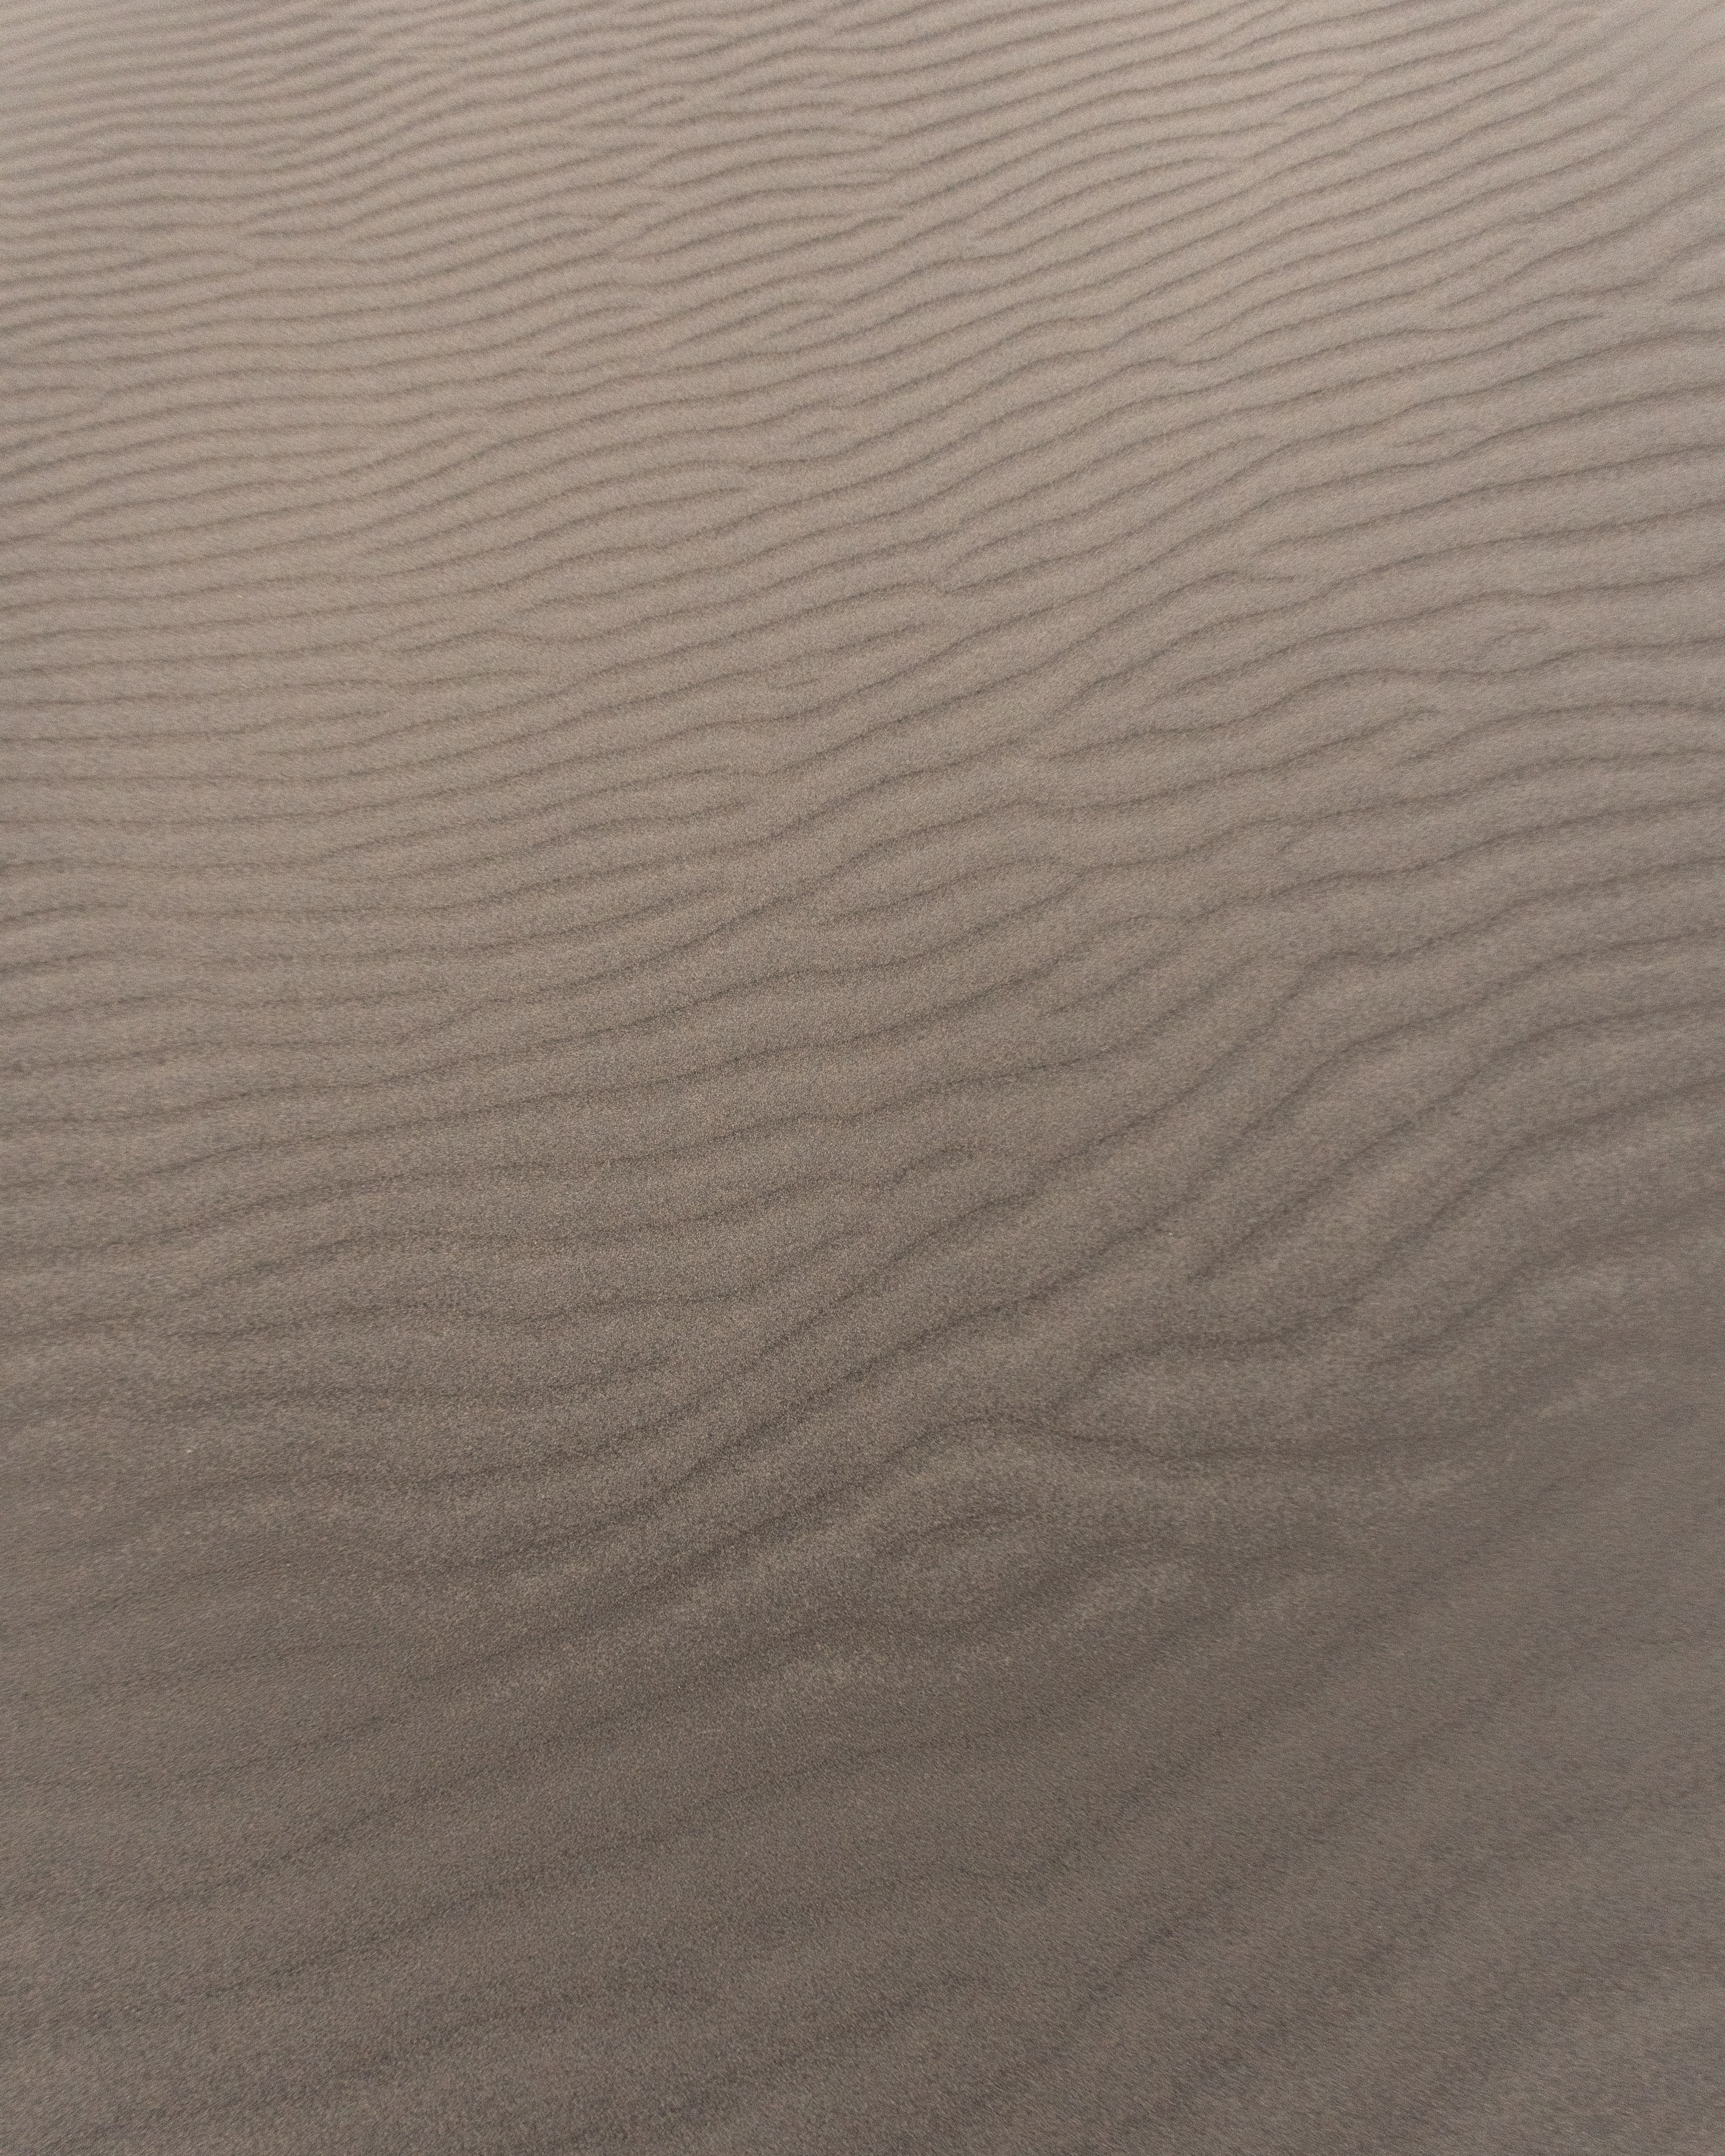 Lock Screen PC Wallpaper waves, sand, desert, texture, textures, stripes, streaks